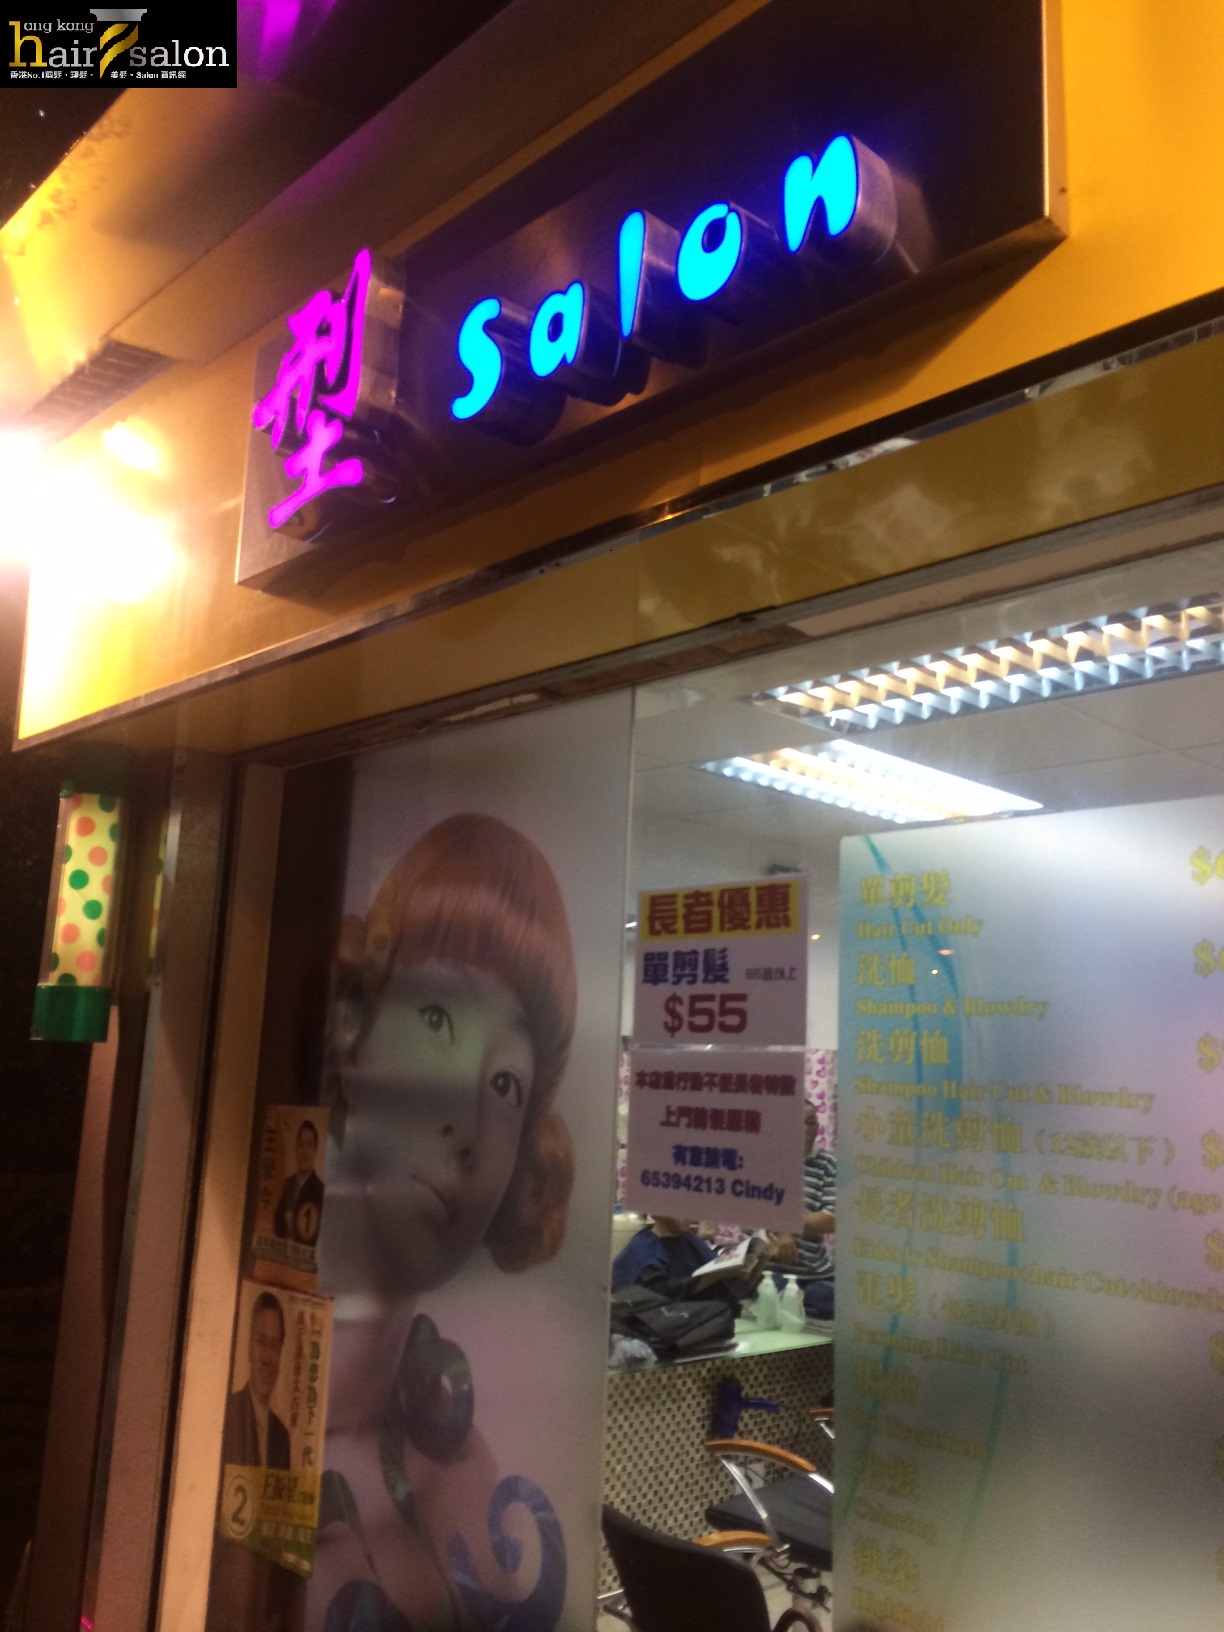 Hair Colouring: 型 Salon